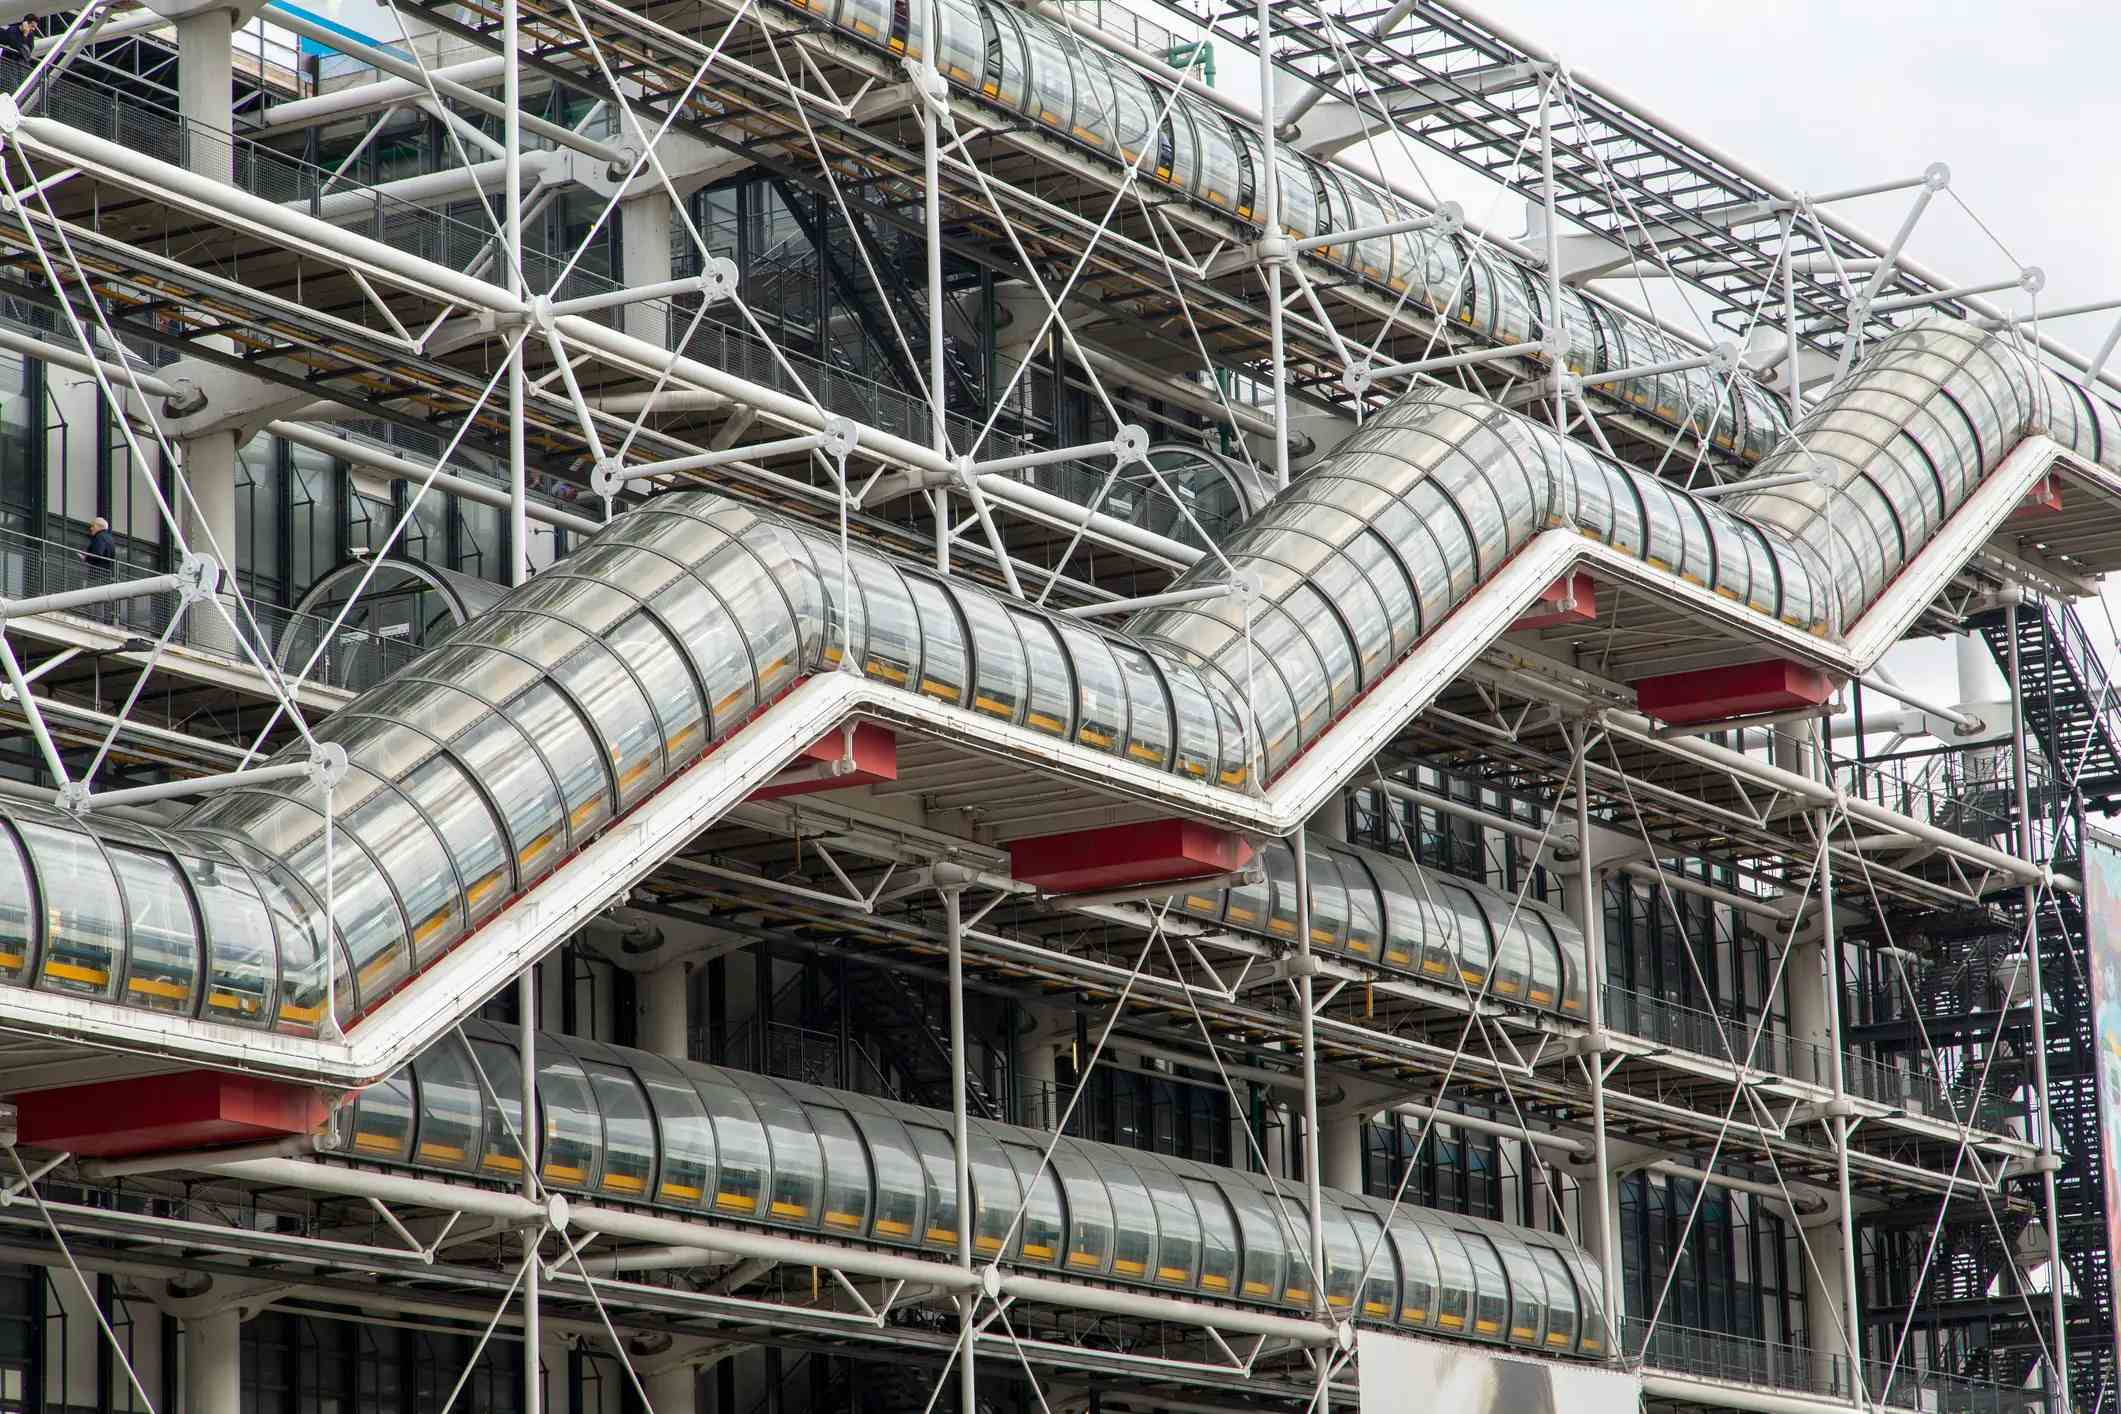 The Centre Pompidou image